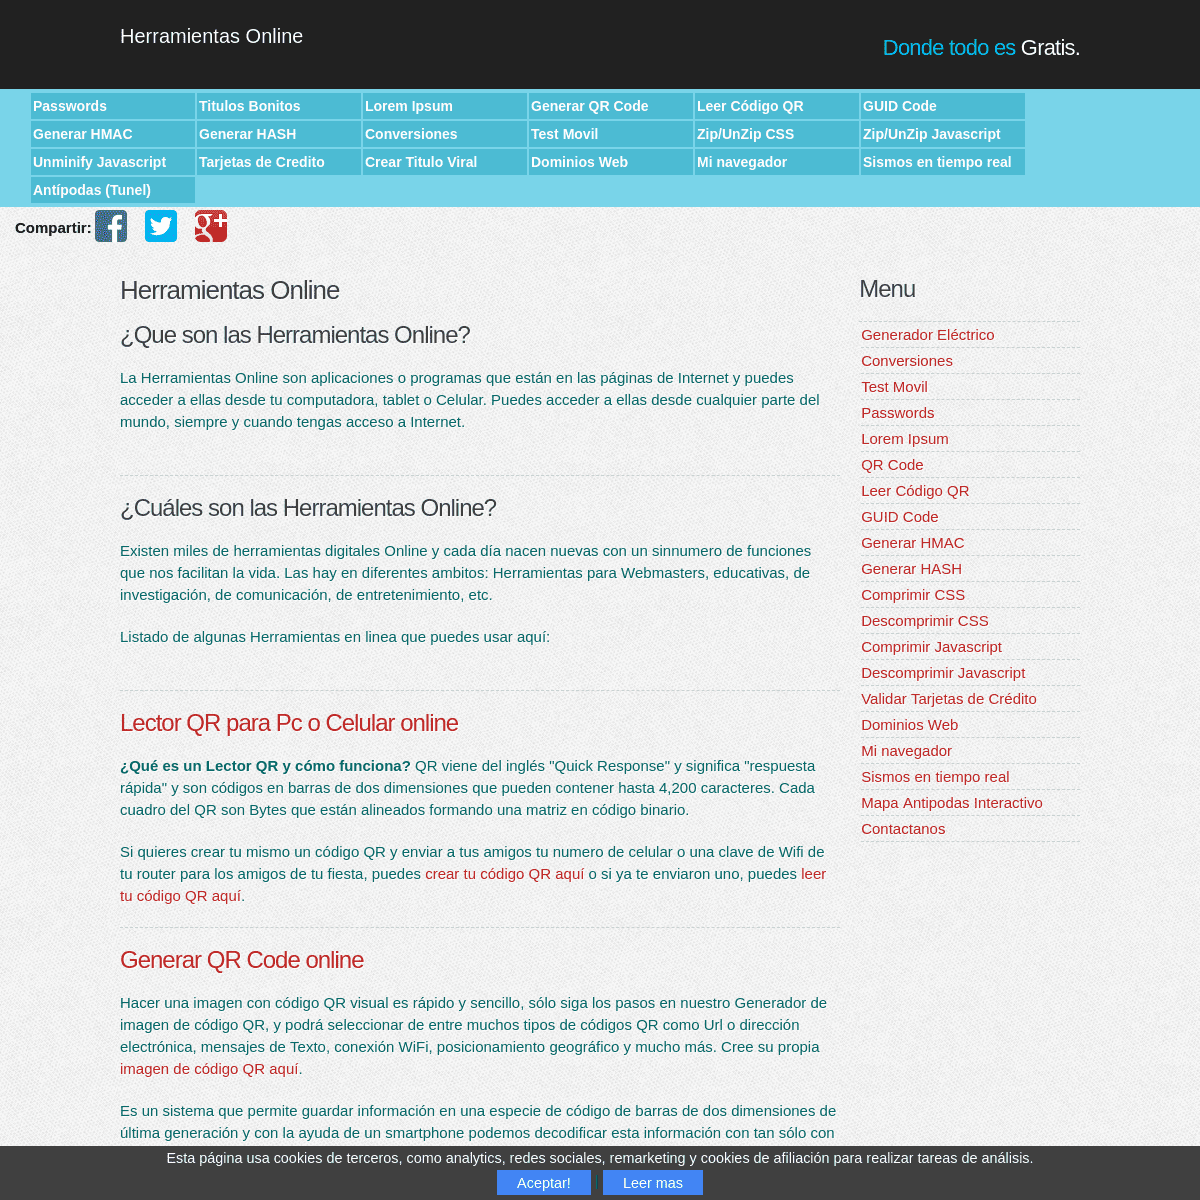 A complete backup of herramientas-online.com